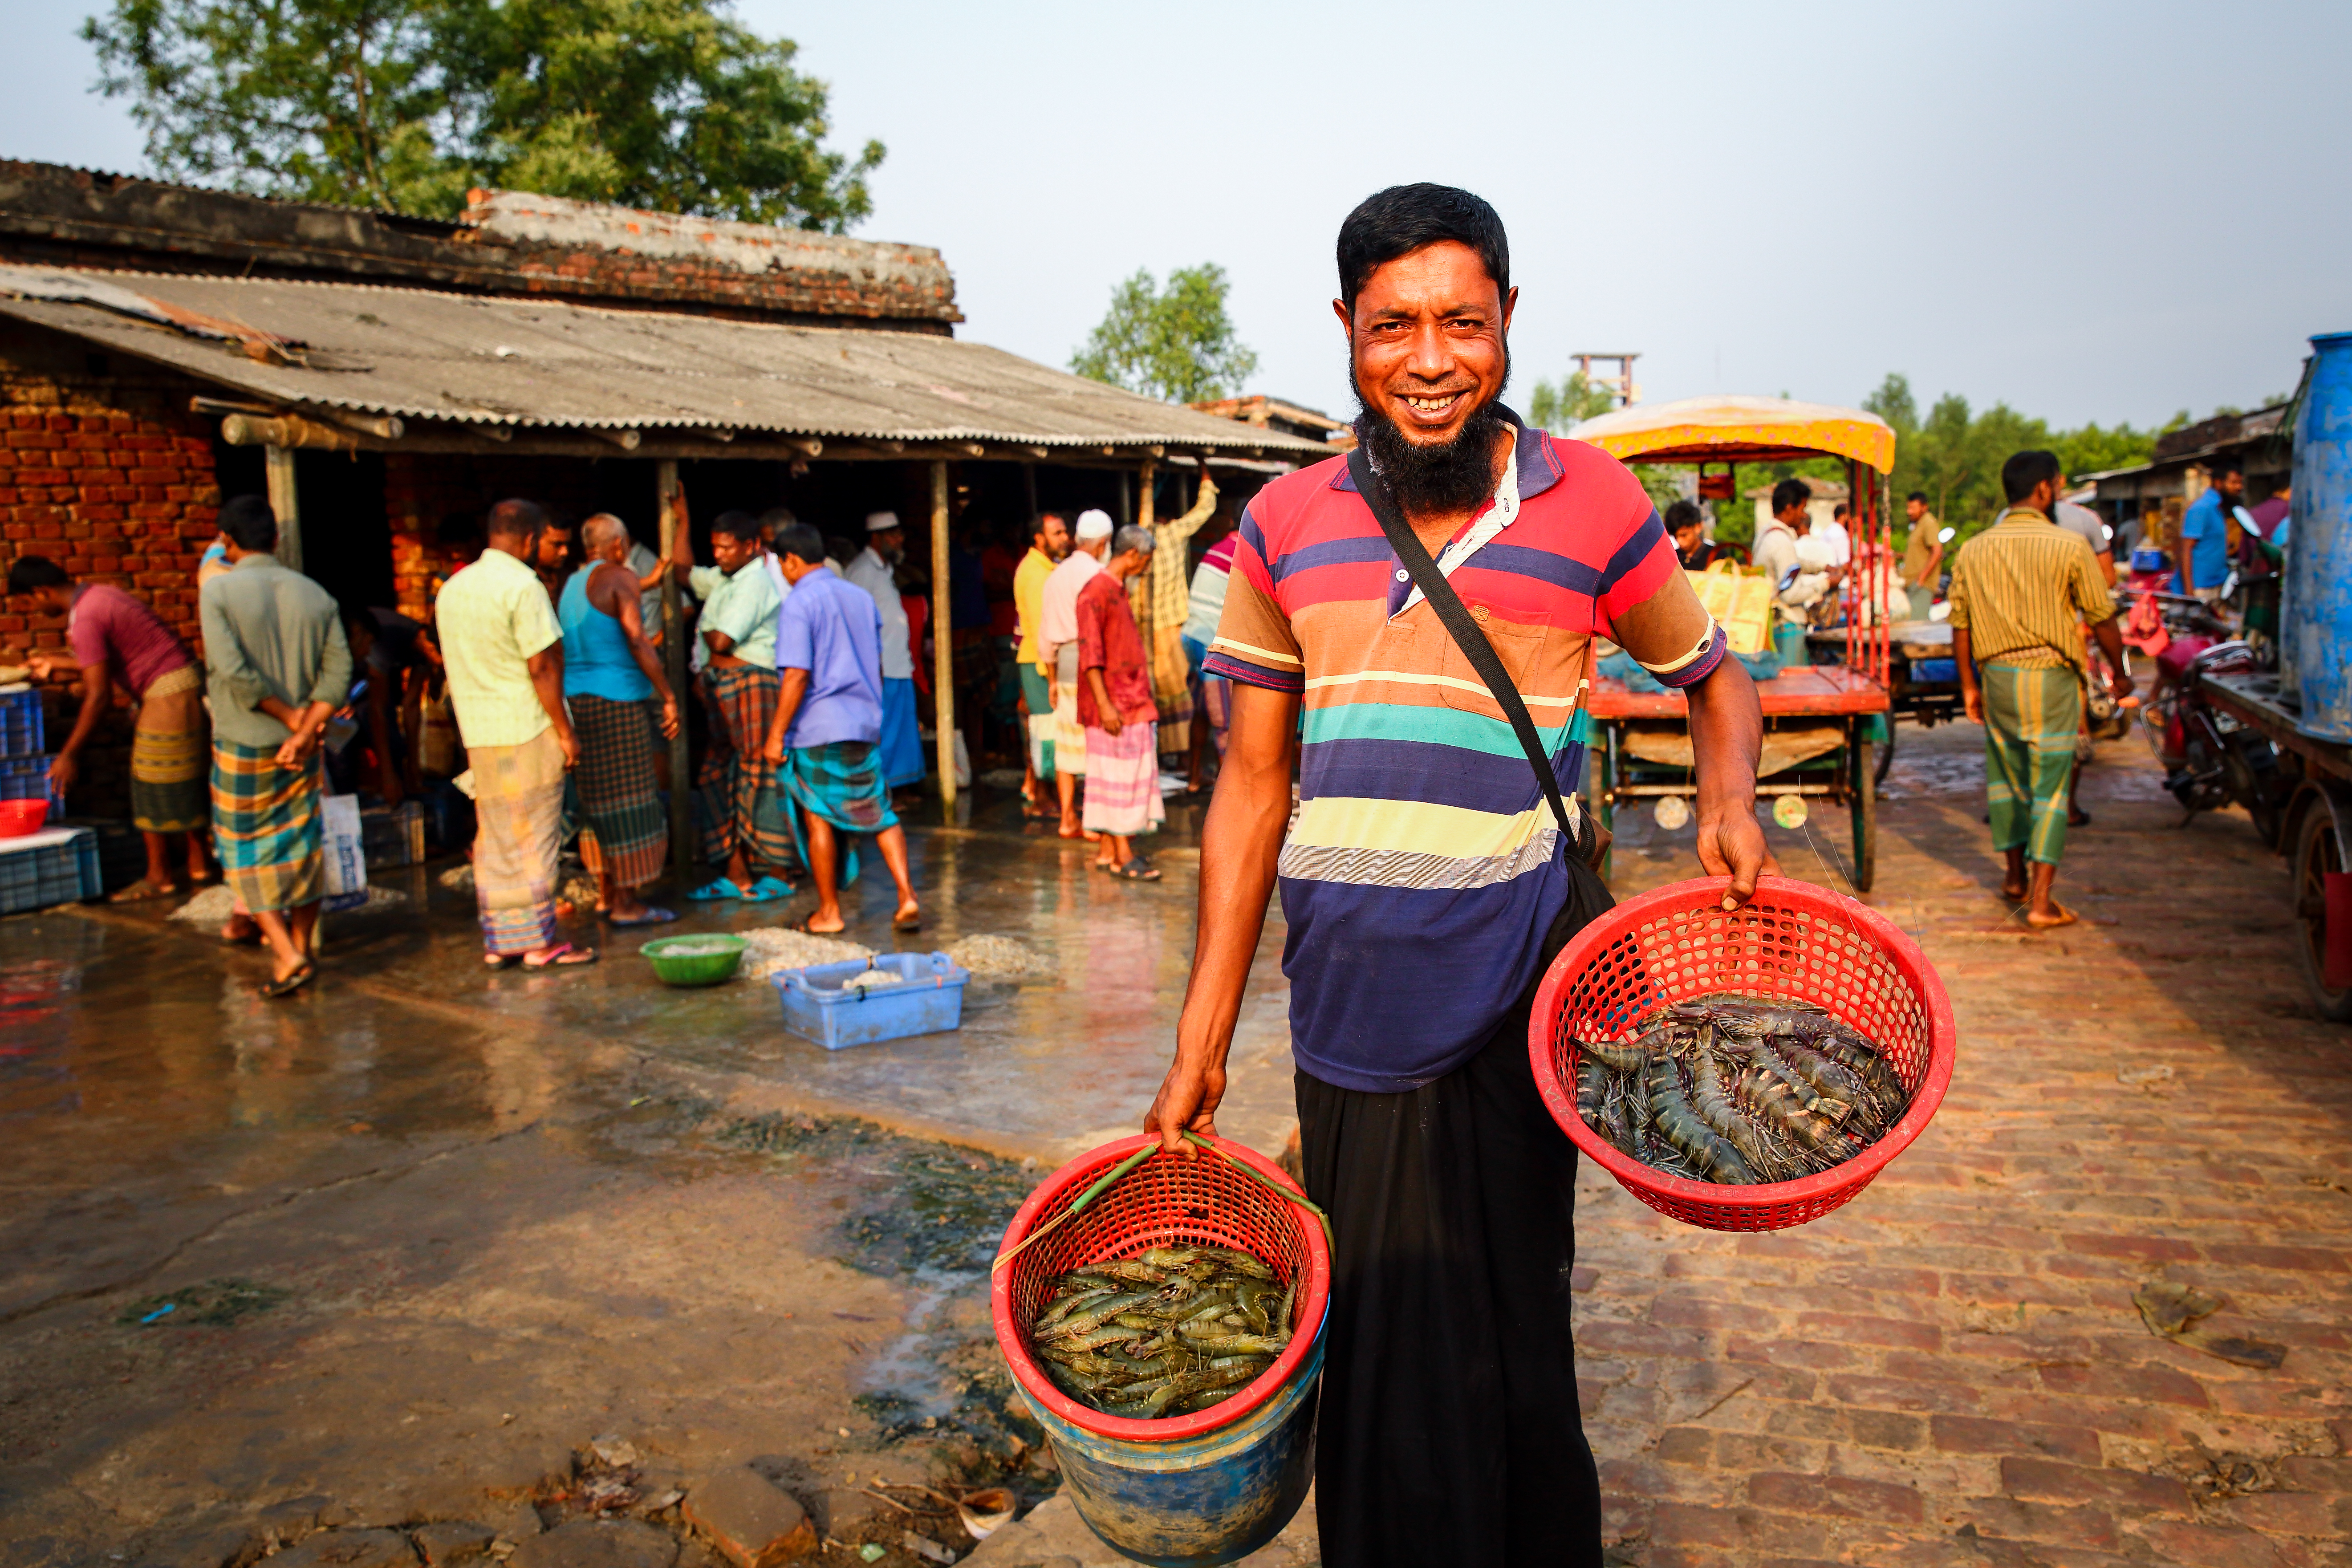 Farmers market in Bangladesh